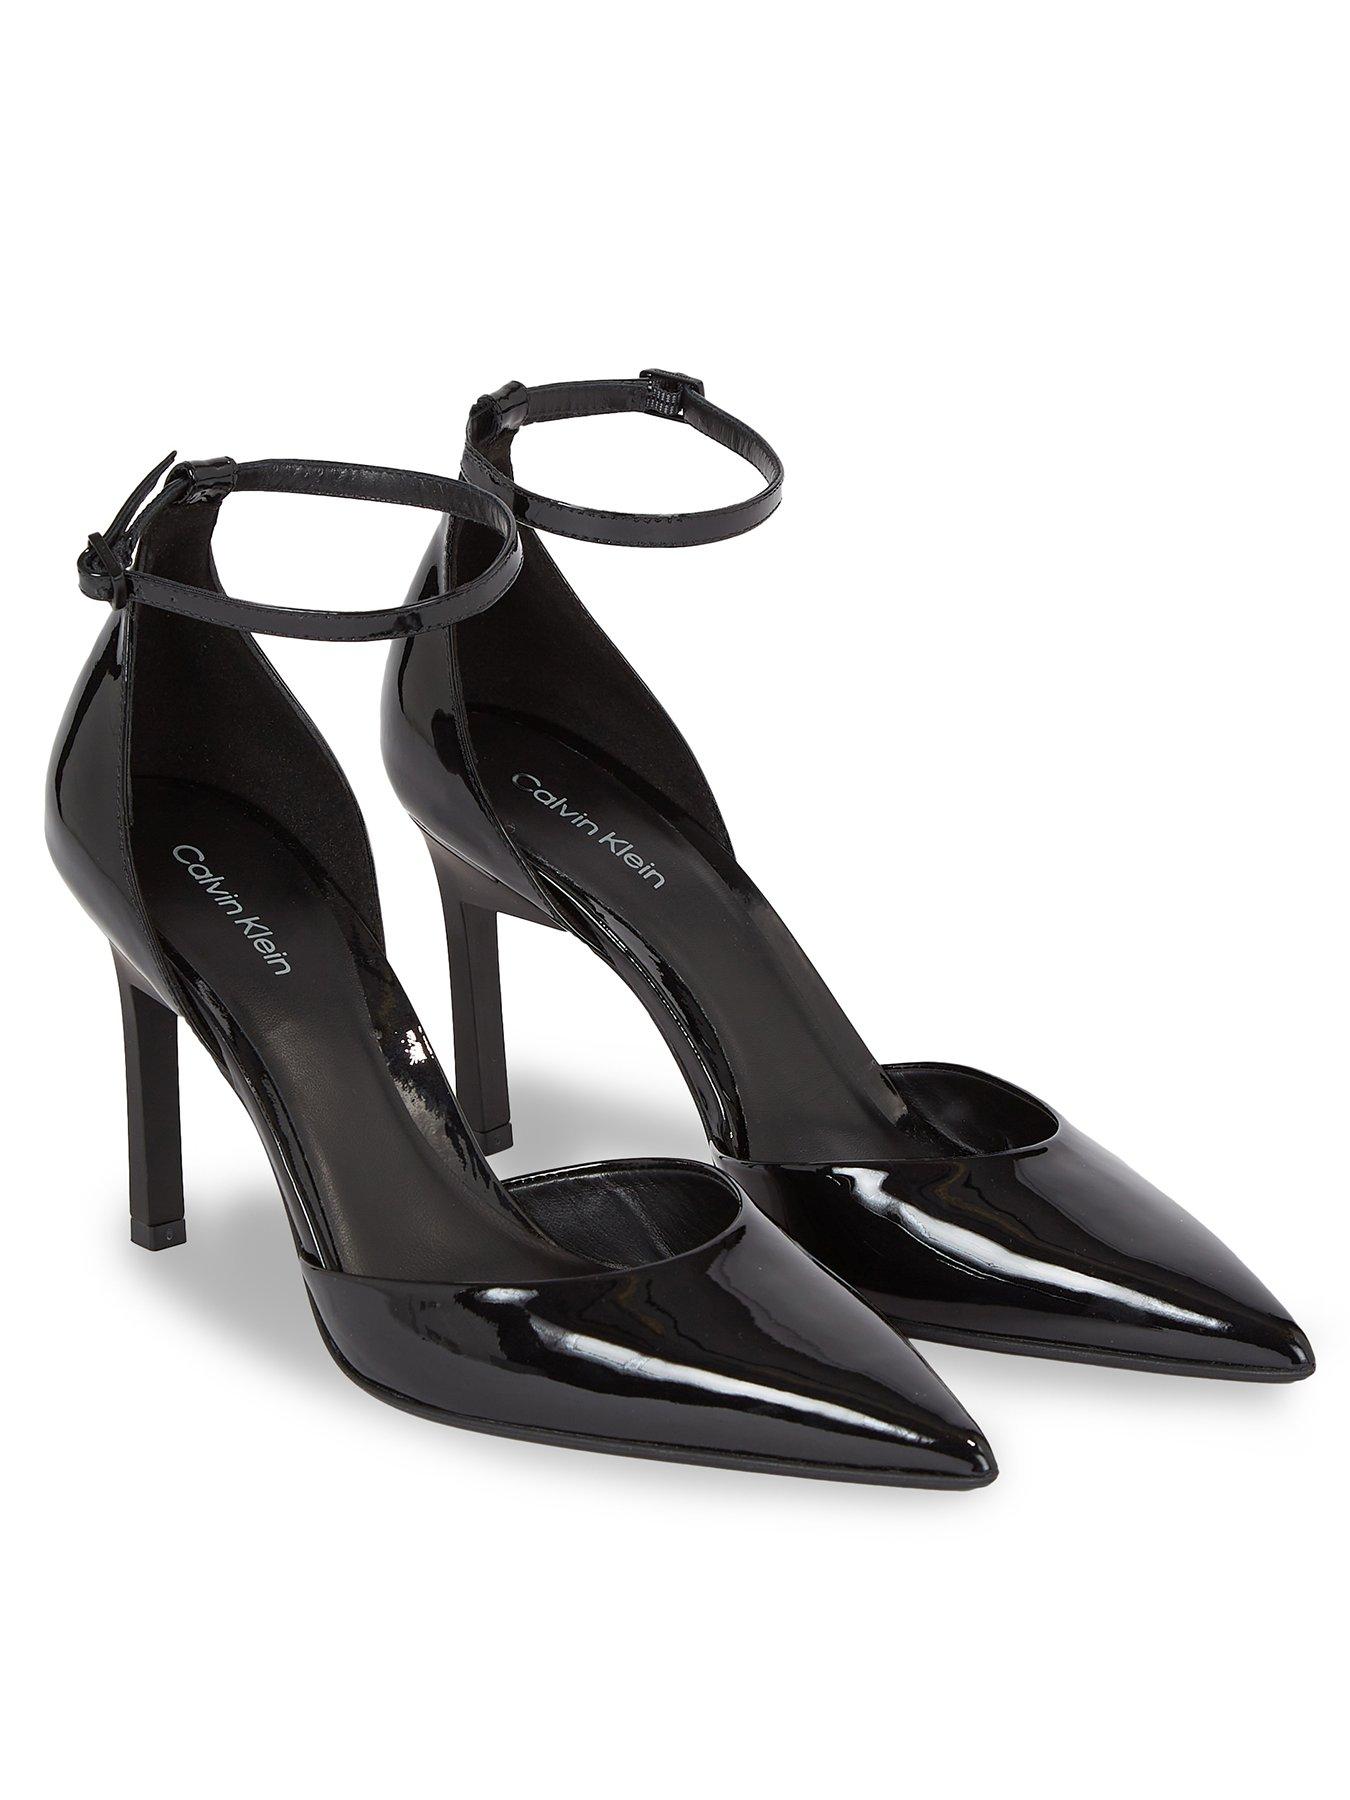 HUSHH New women's high heels flocking sweet thick heels women's office  pointed toe work cute shoes women's shoes-Dark Gray,36 : Amazon.co.uk:  Fashion